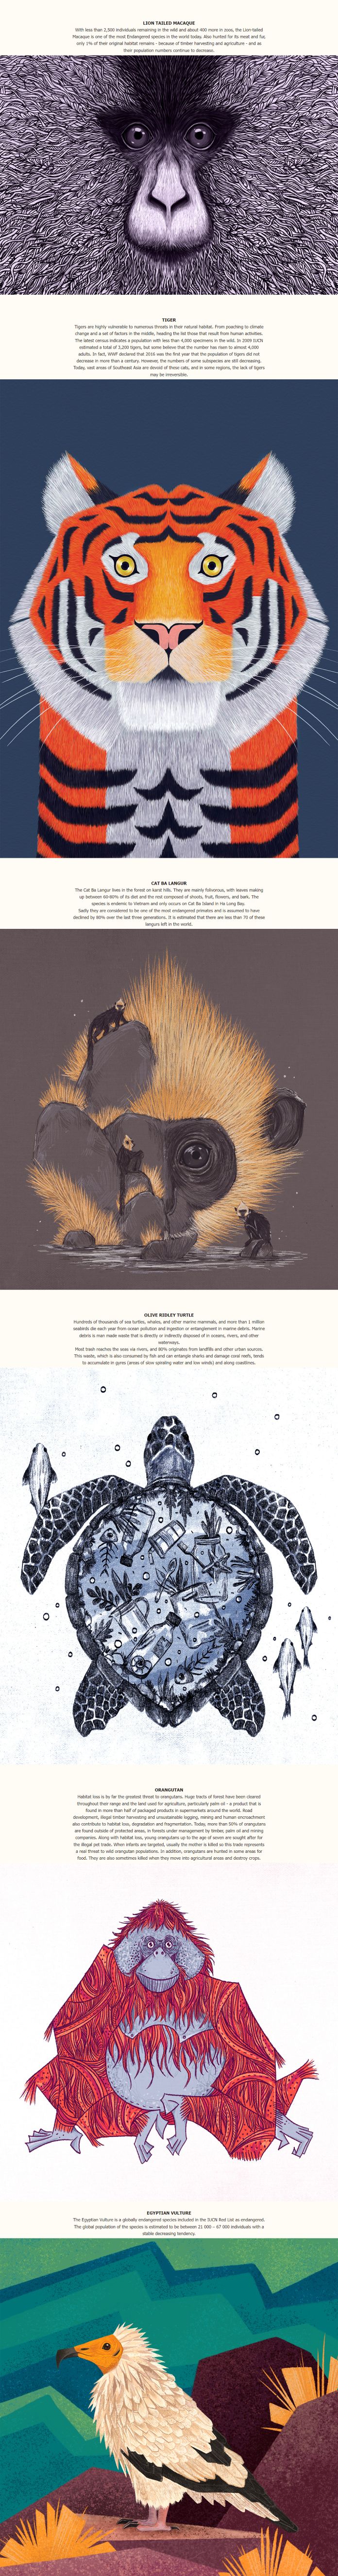 Animal awareness illustrations by Rohan Dahotre